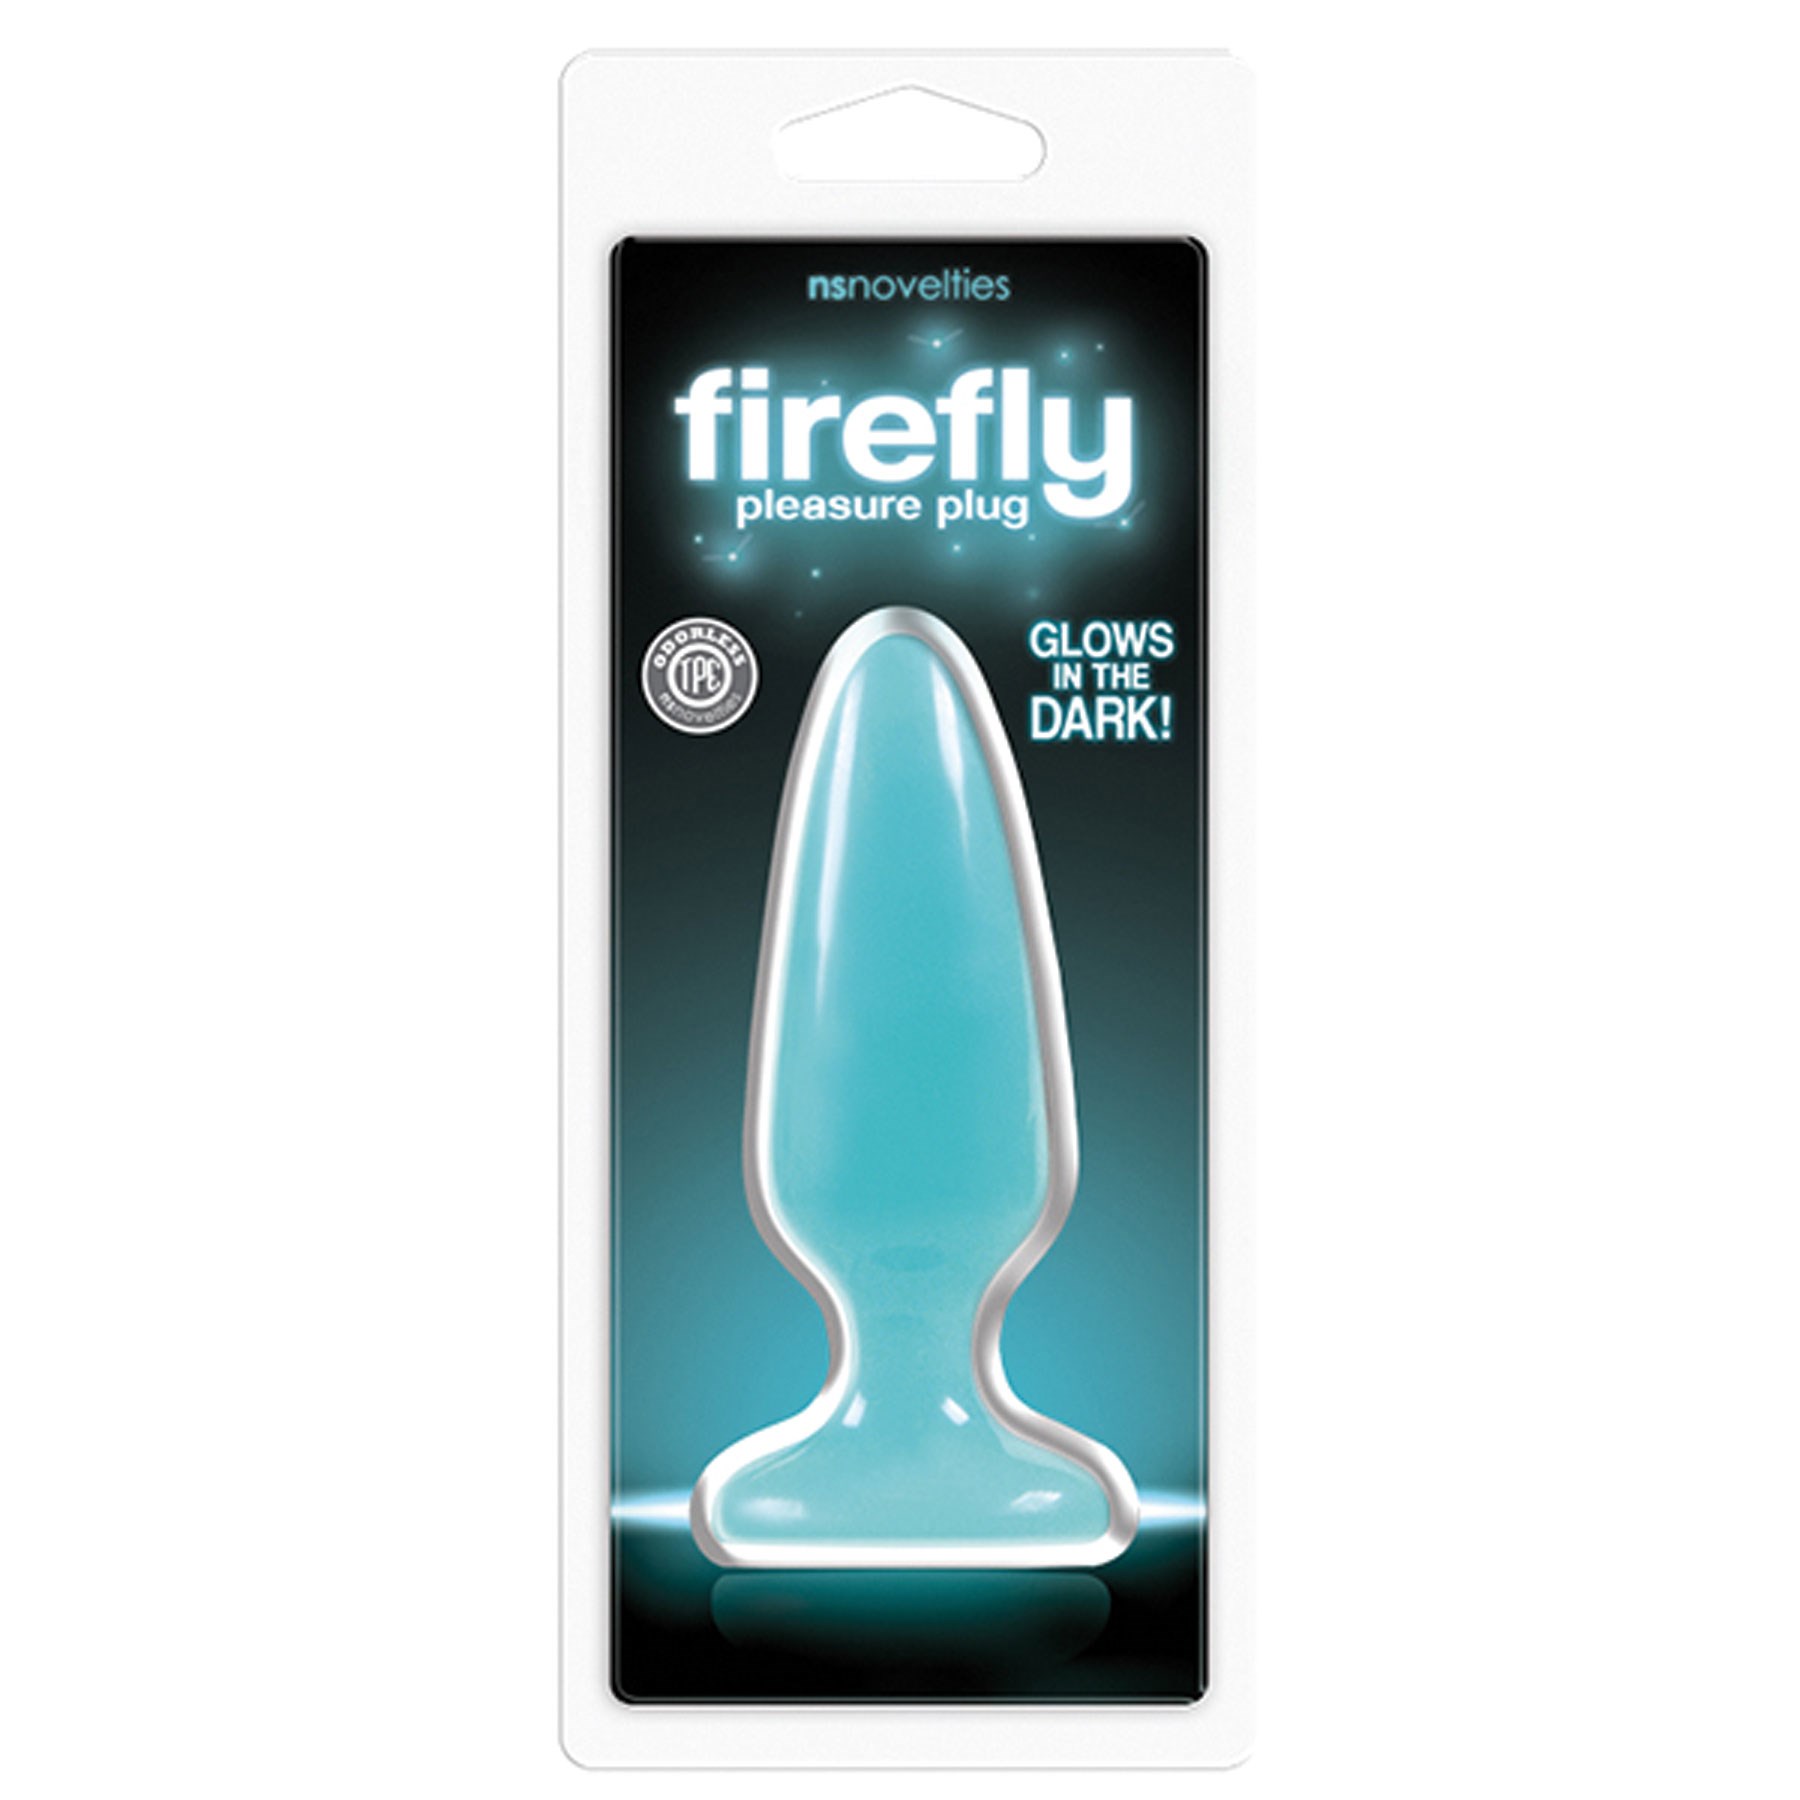 Firefly Pleasure Plug blue box